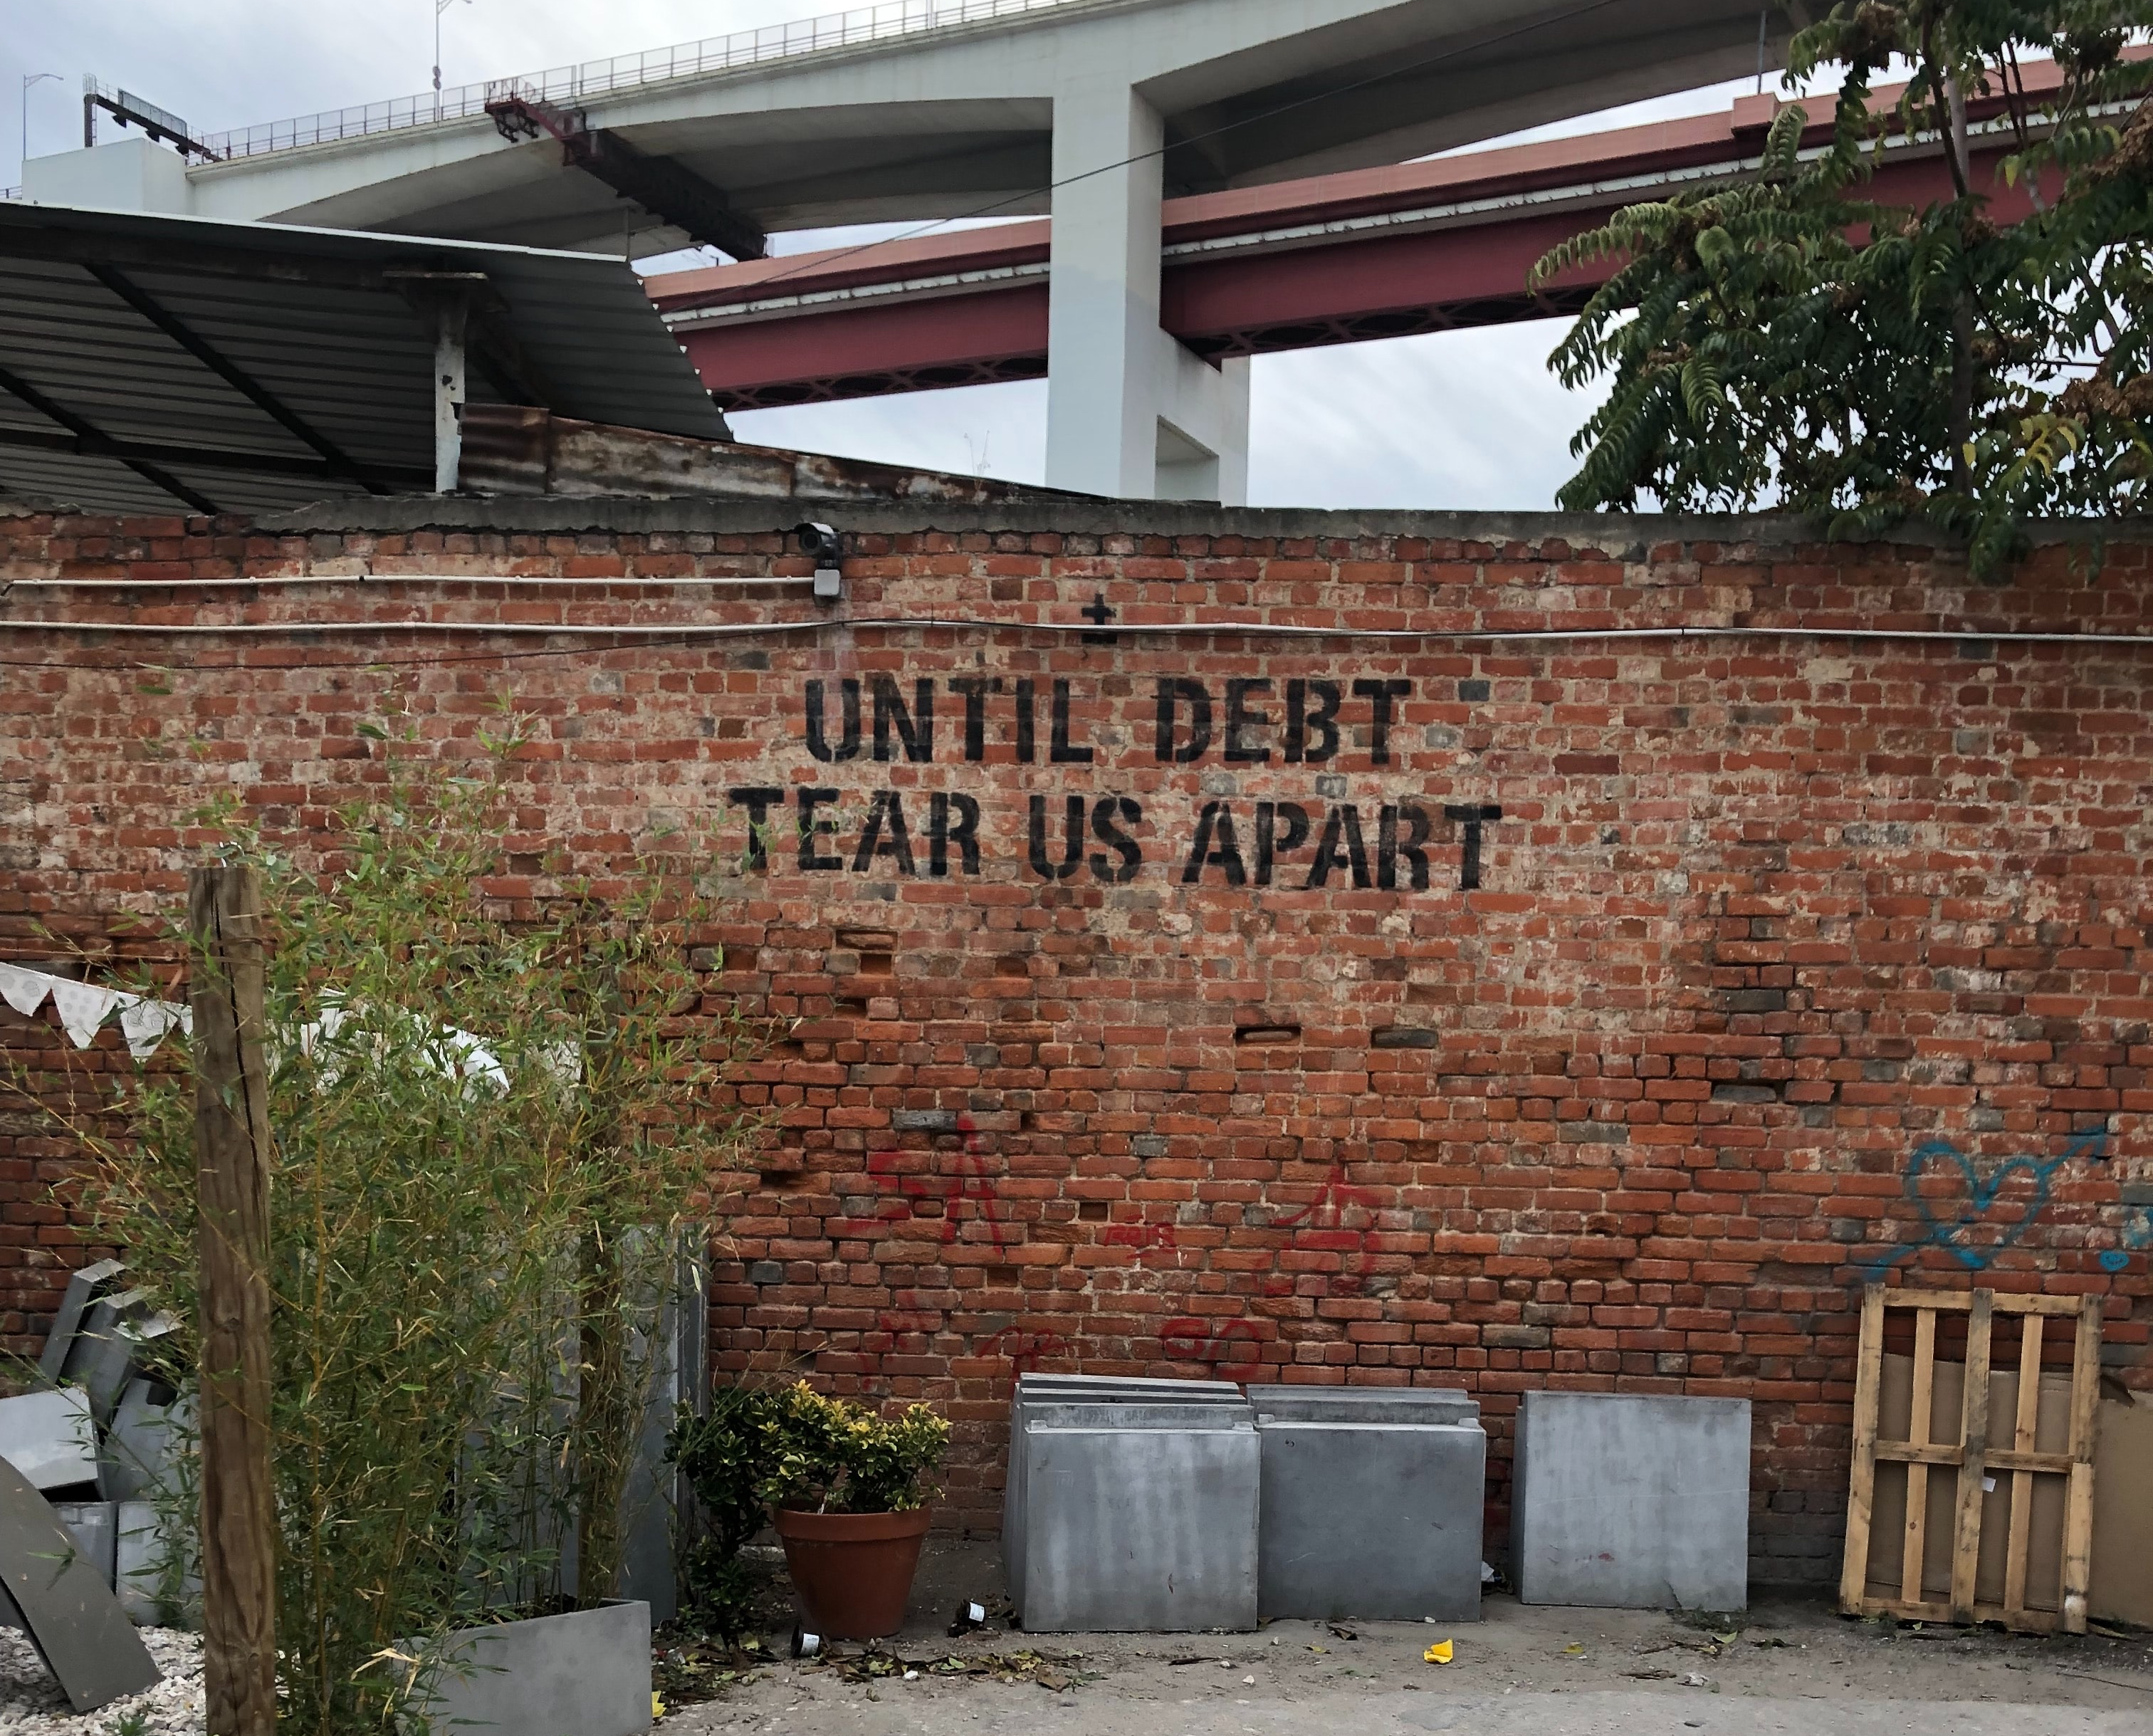 Black spray paint graffiti on brick wall that reads Til Debt Tear Us Apart